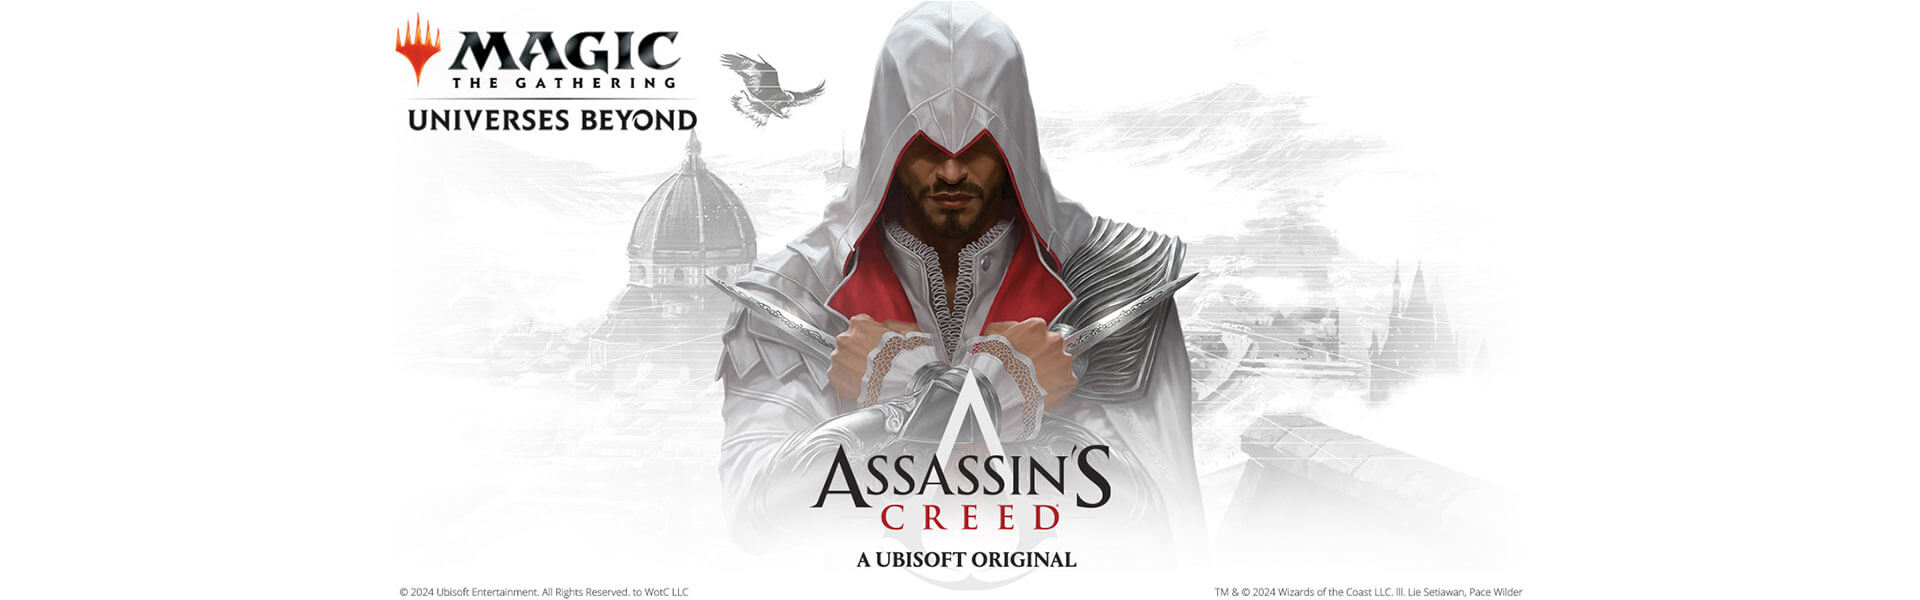 Assassins Creed - Magic The Gathering